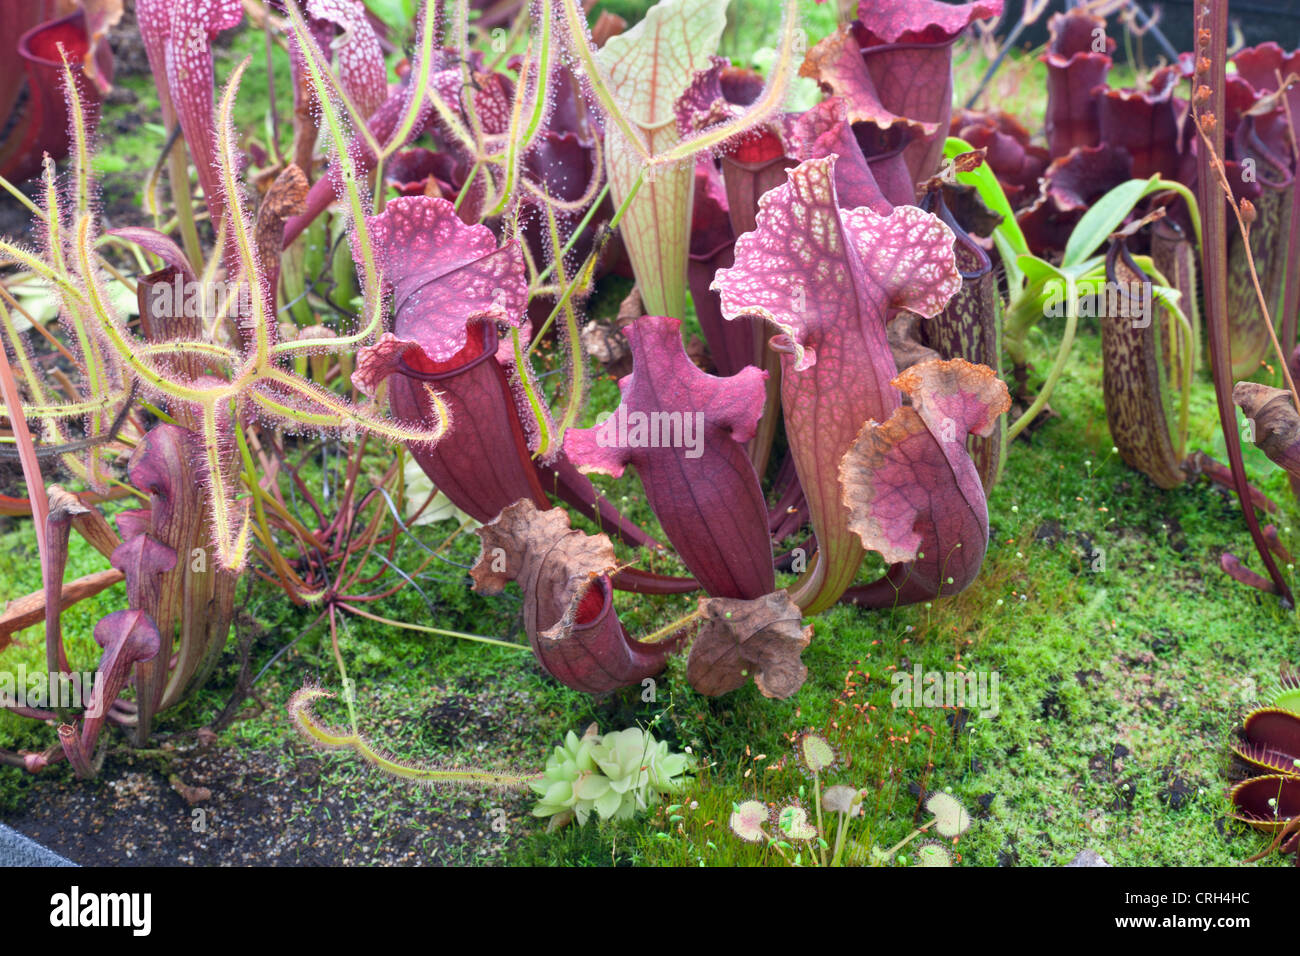 Carnivorous plant garden. Stock Photo